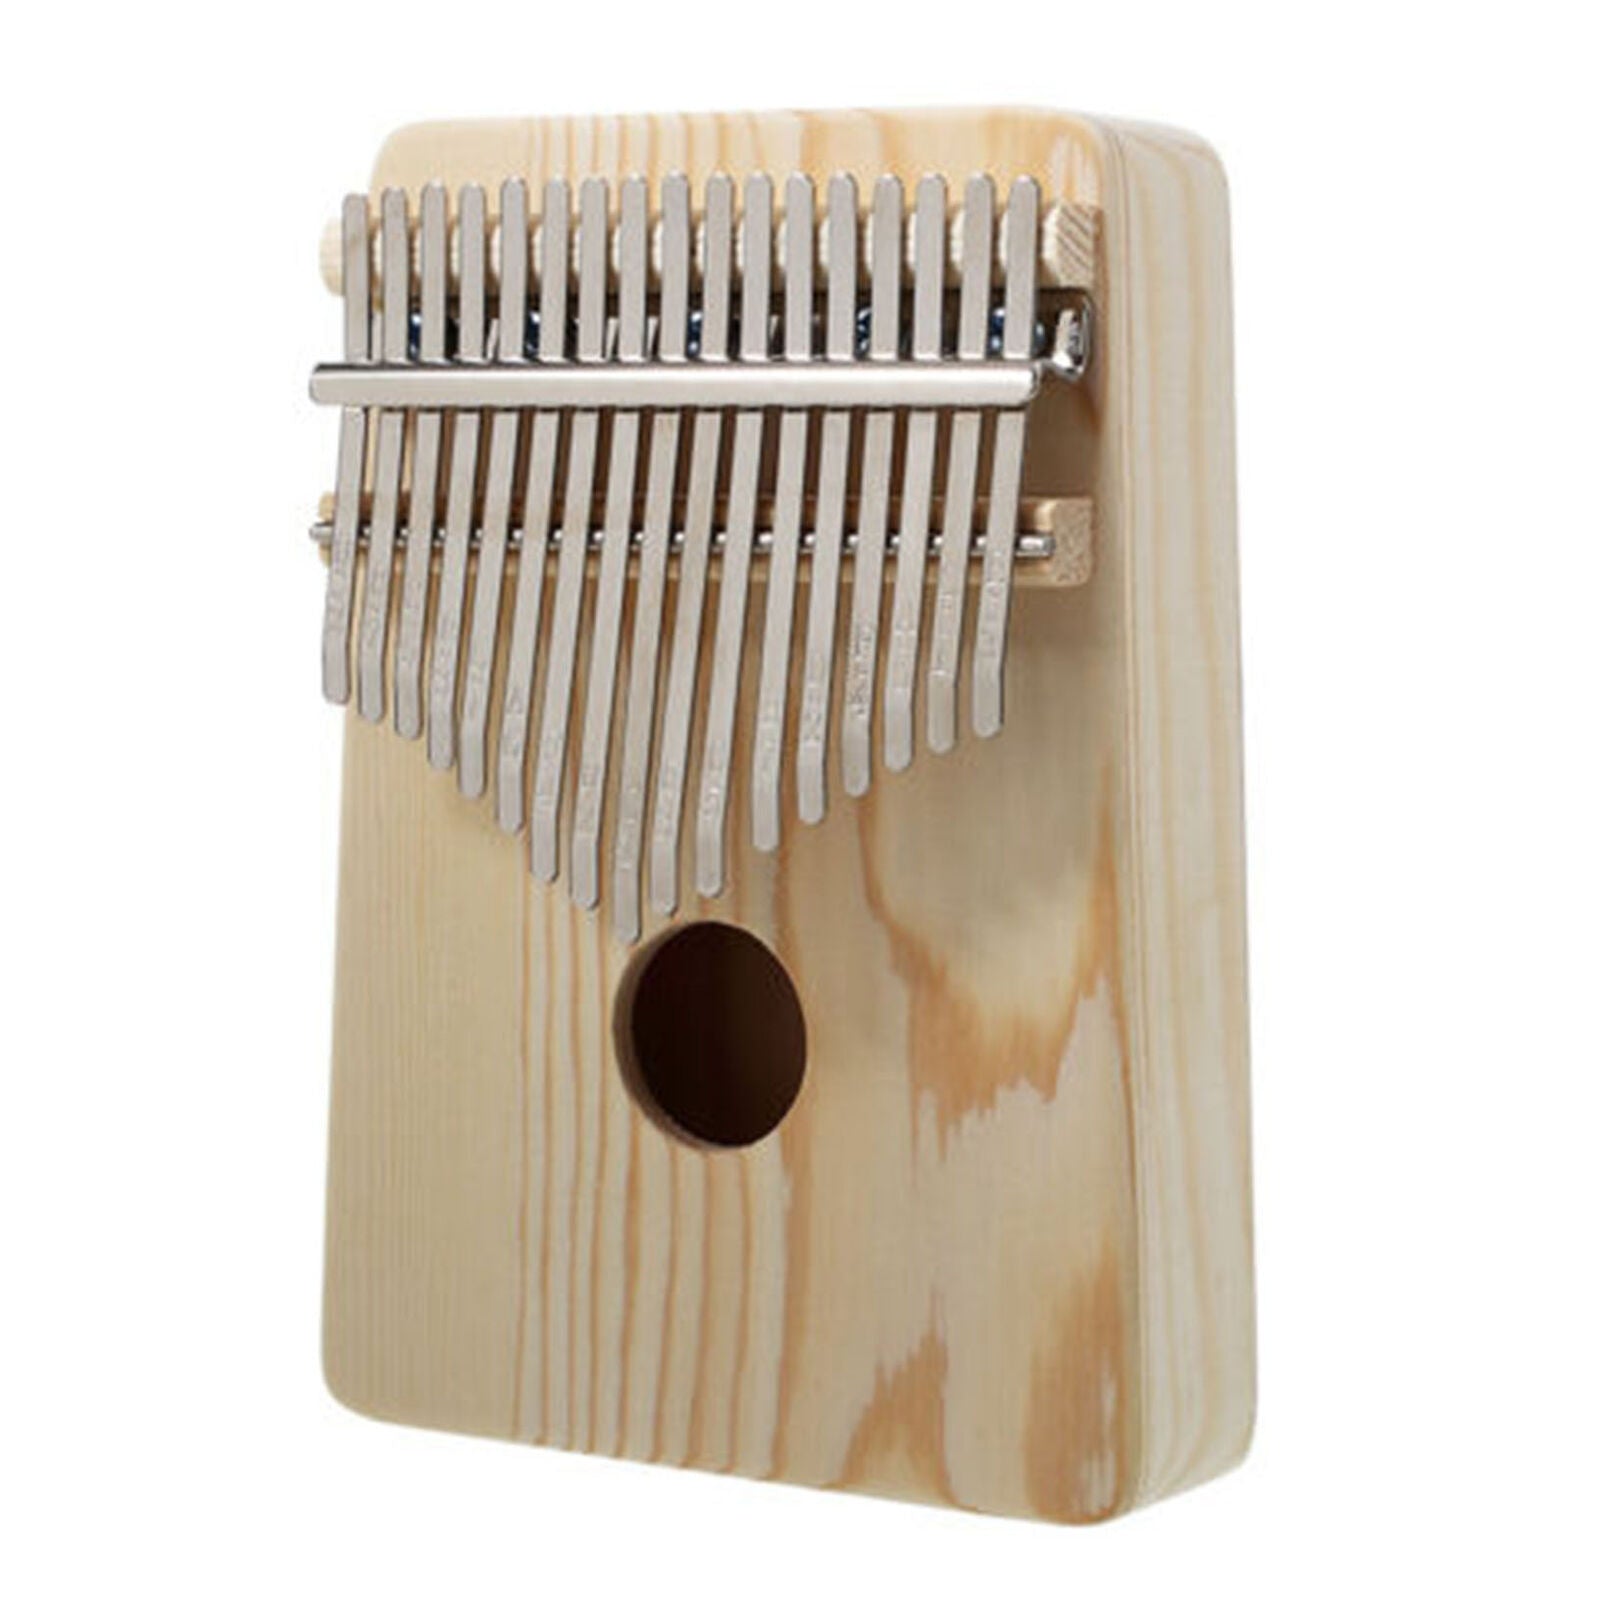 New 17 Keys Kalimba African Solid Mahogany Wood Thumb Piano Finger Percussion